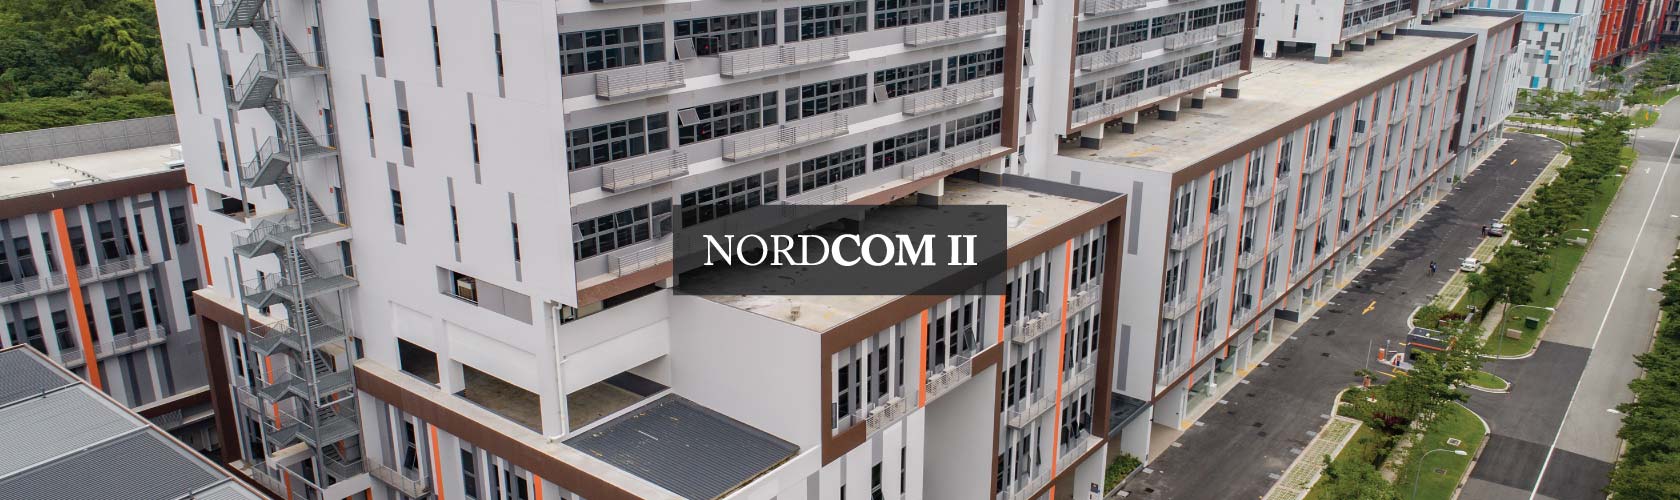 nordcom ii title building top montage